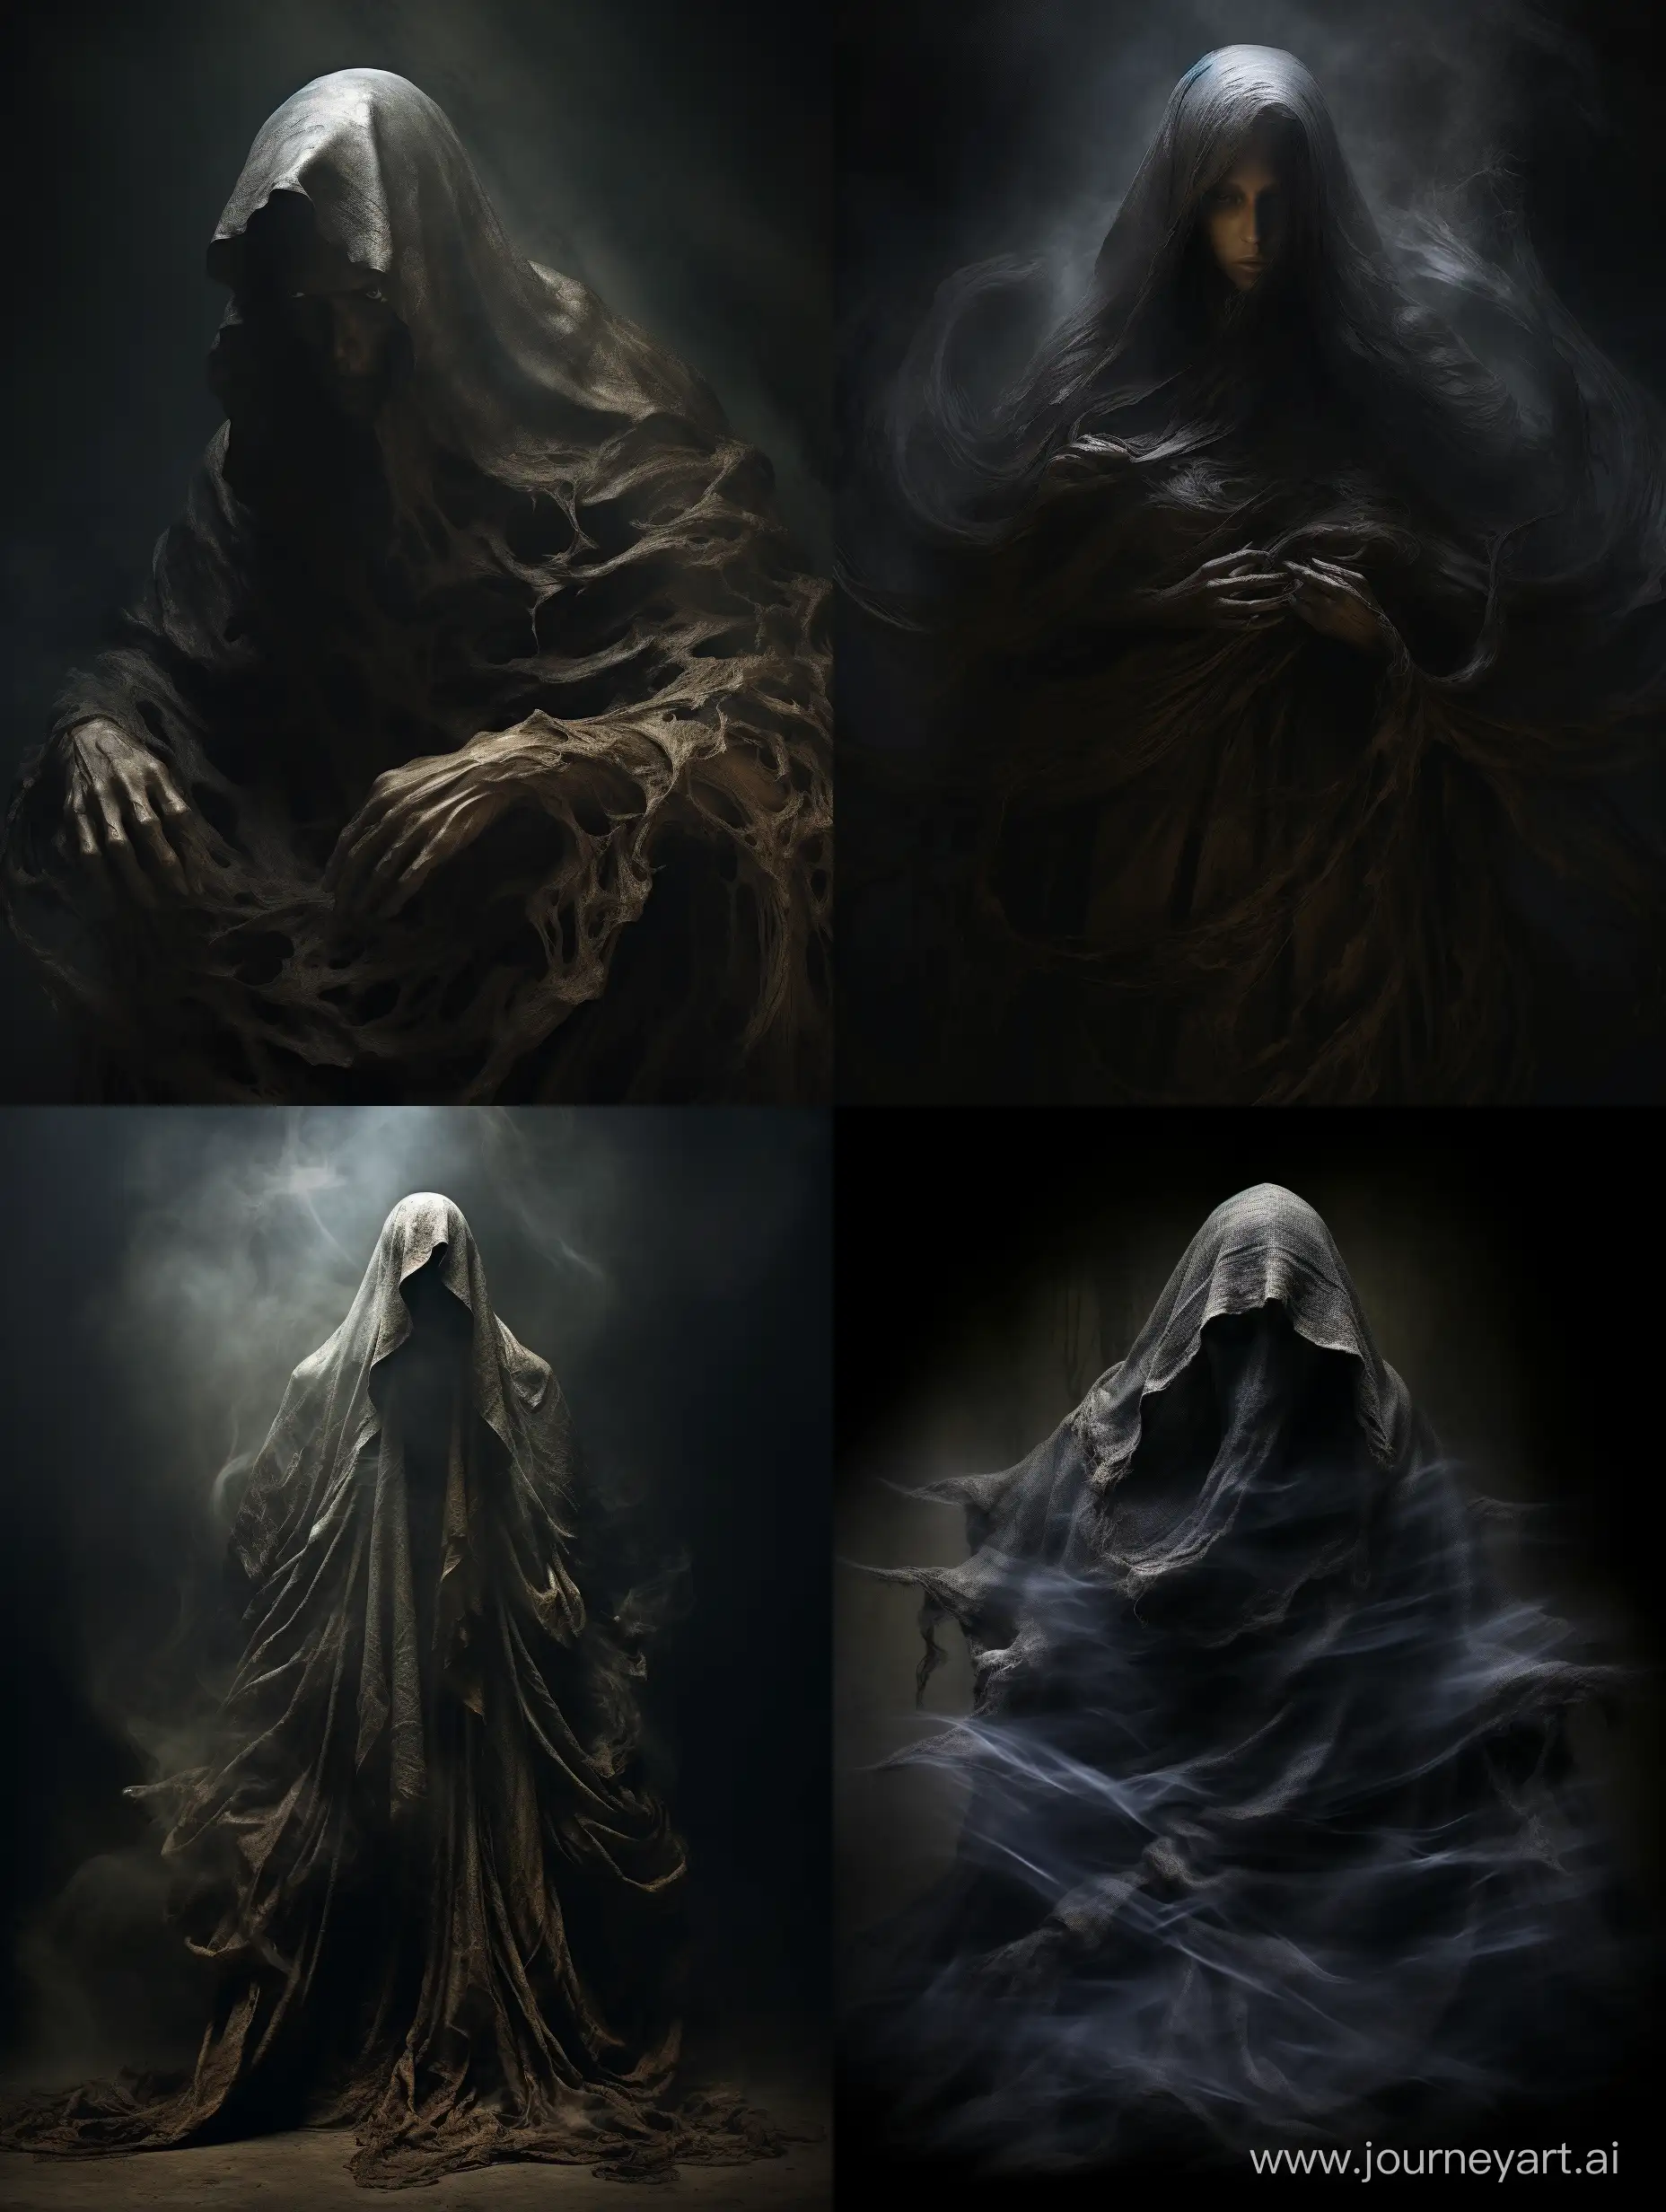 Sinister-Dark-Spirit-Portrait-Eerie-Cloaked-Entity-with-Piercing-Eyes